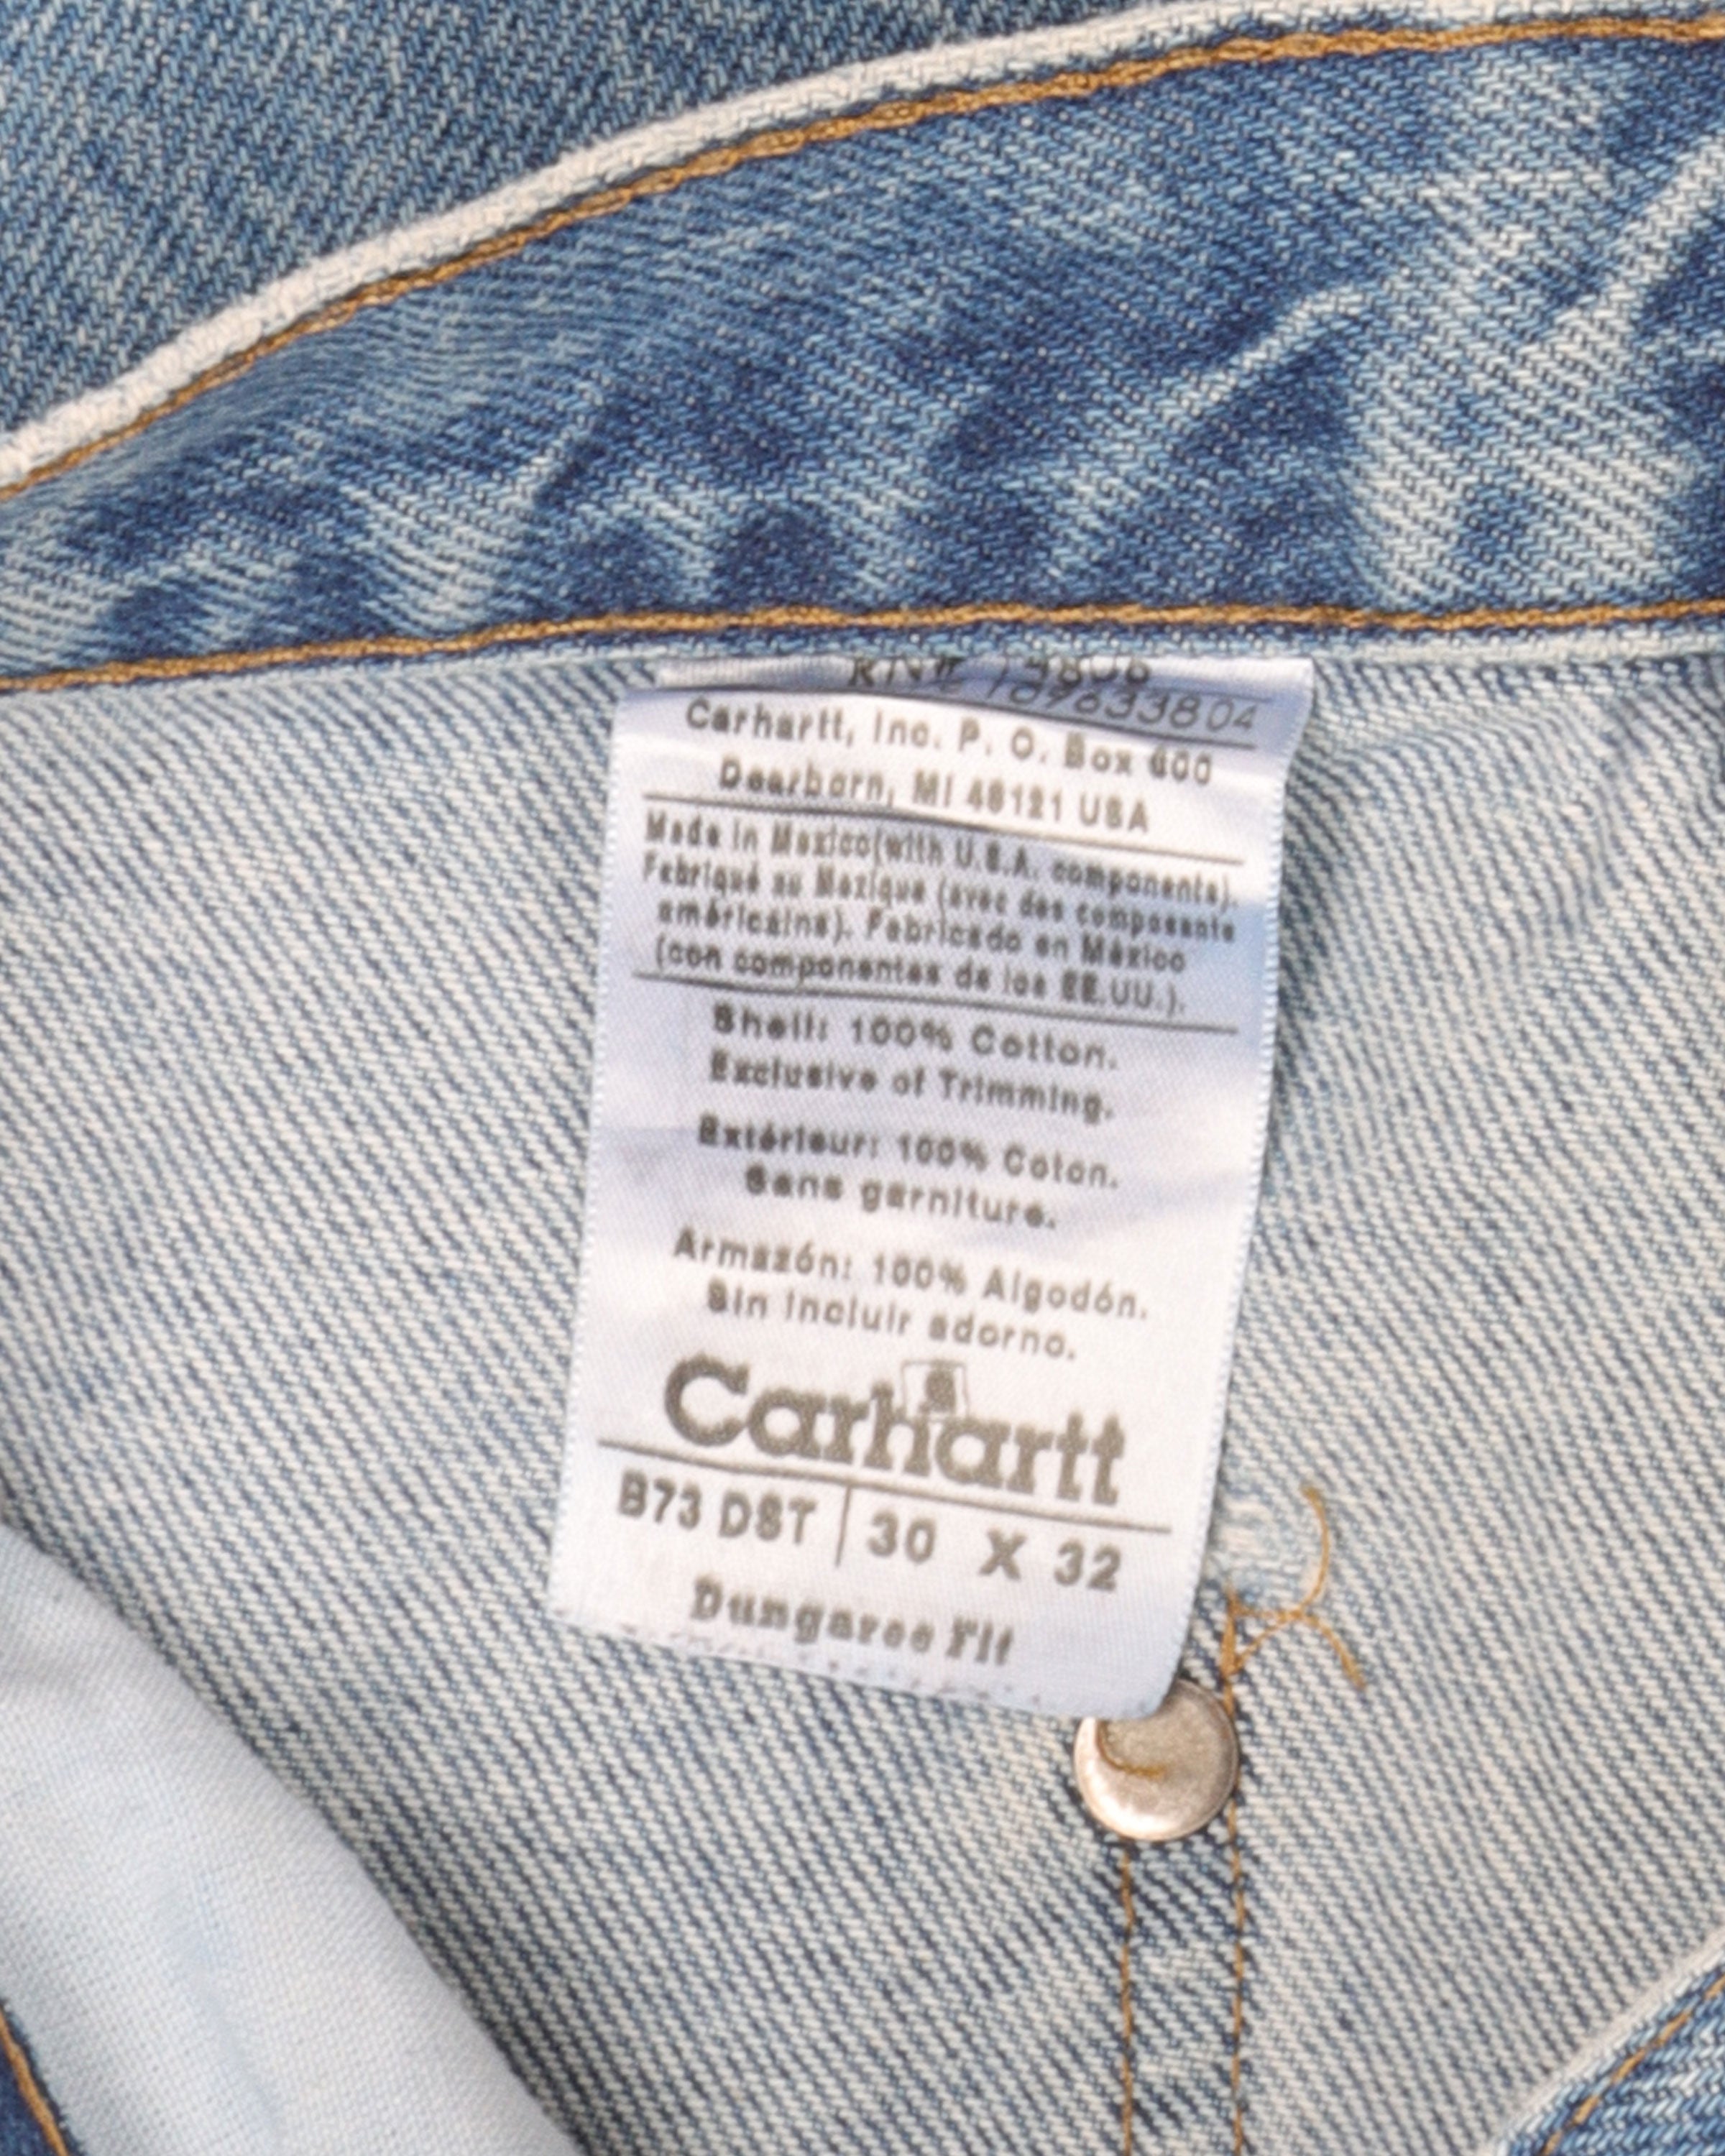 Carhartt Double Knee Carpenter Jeans